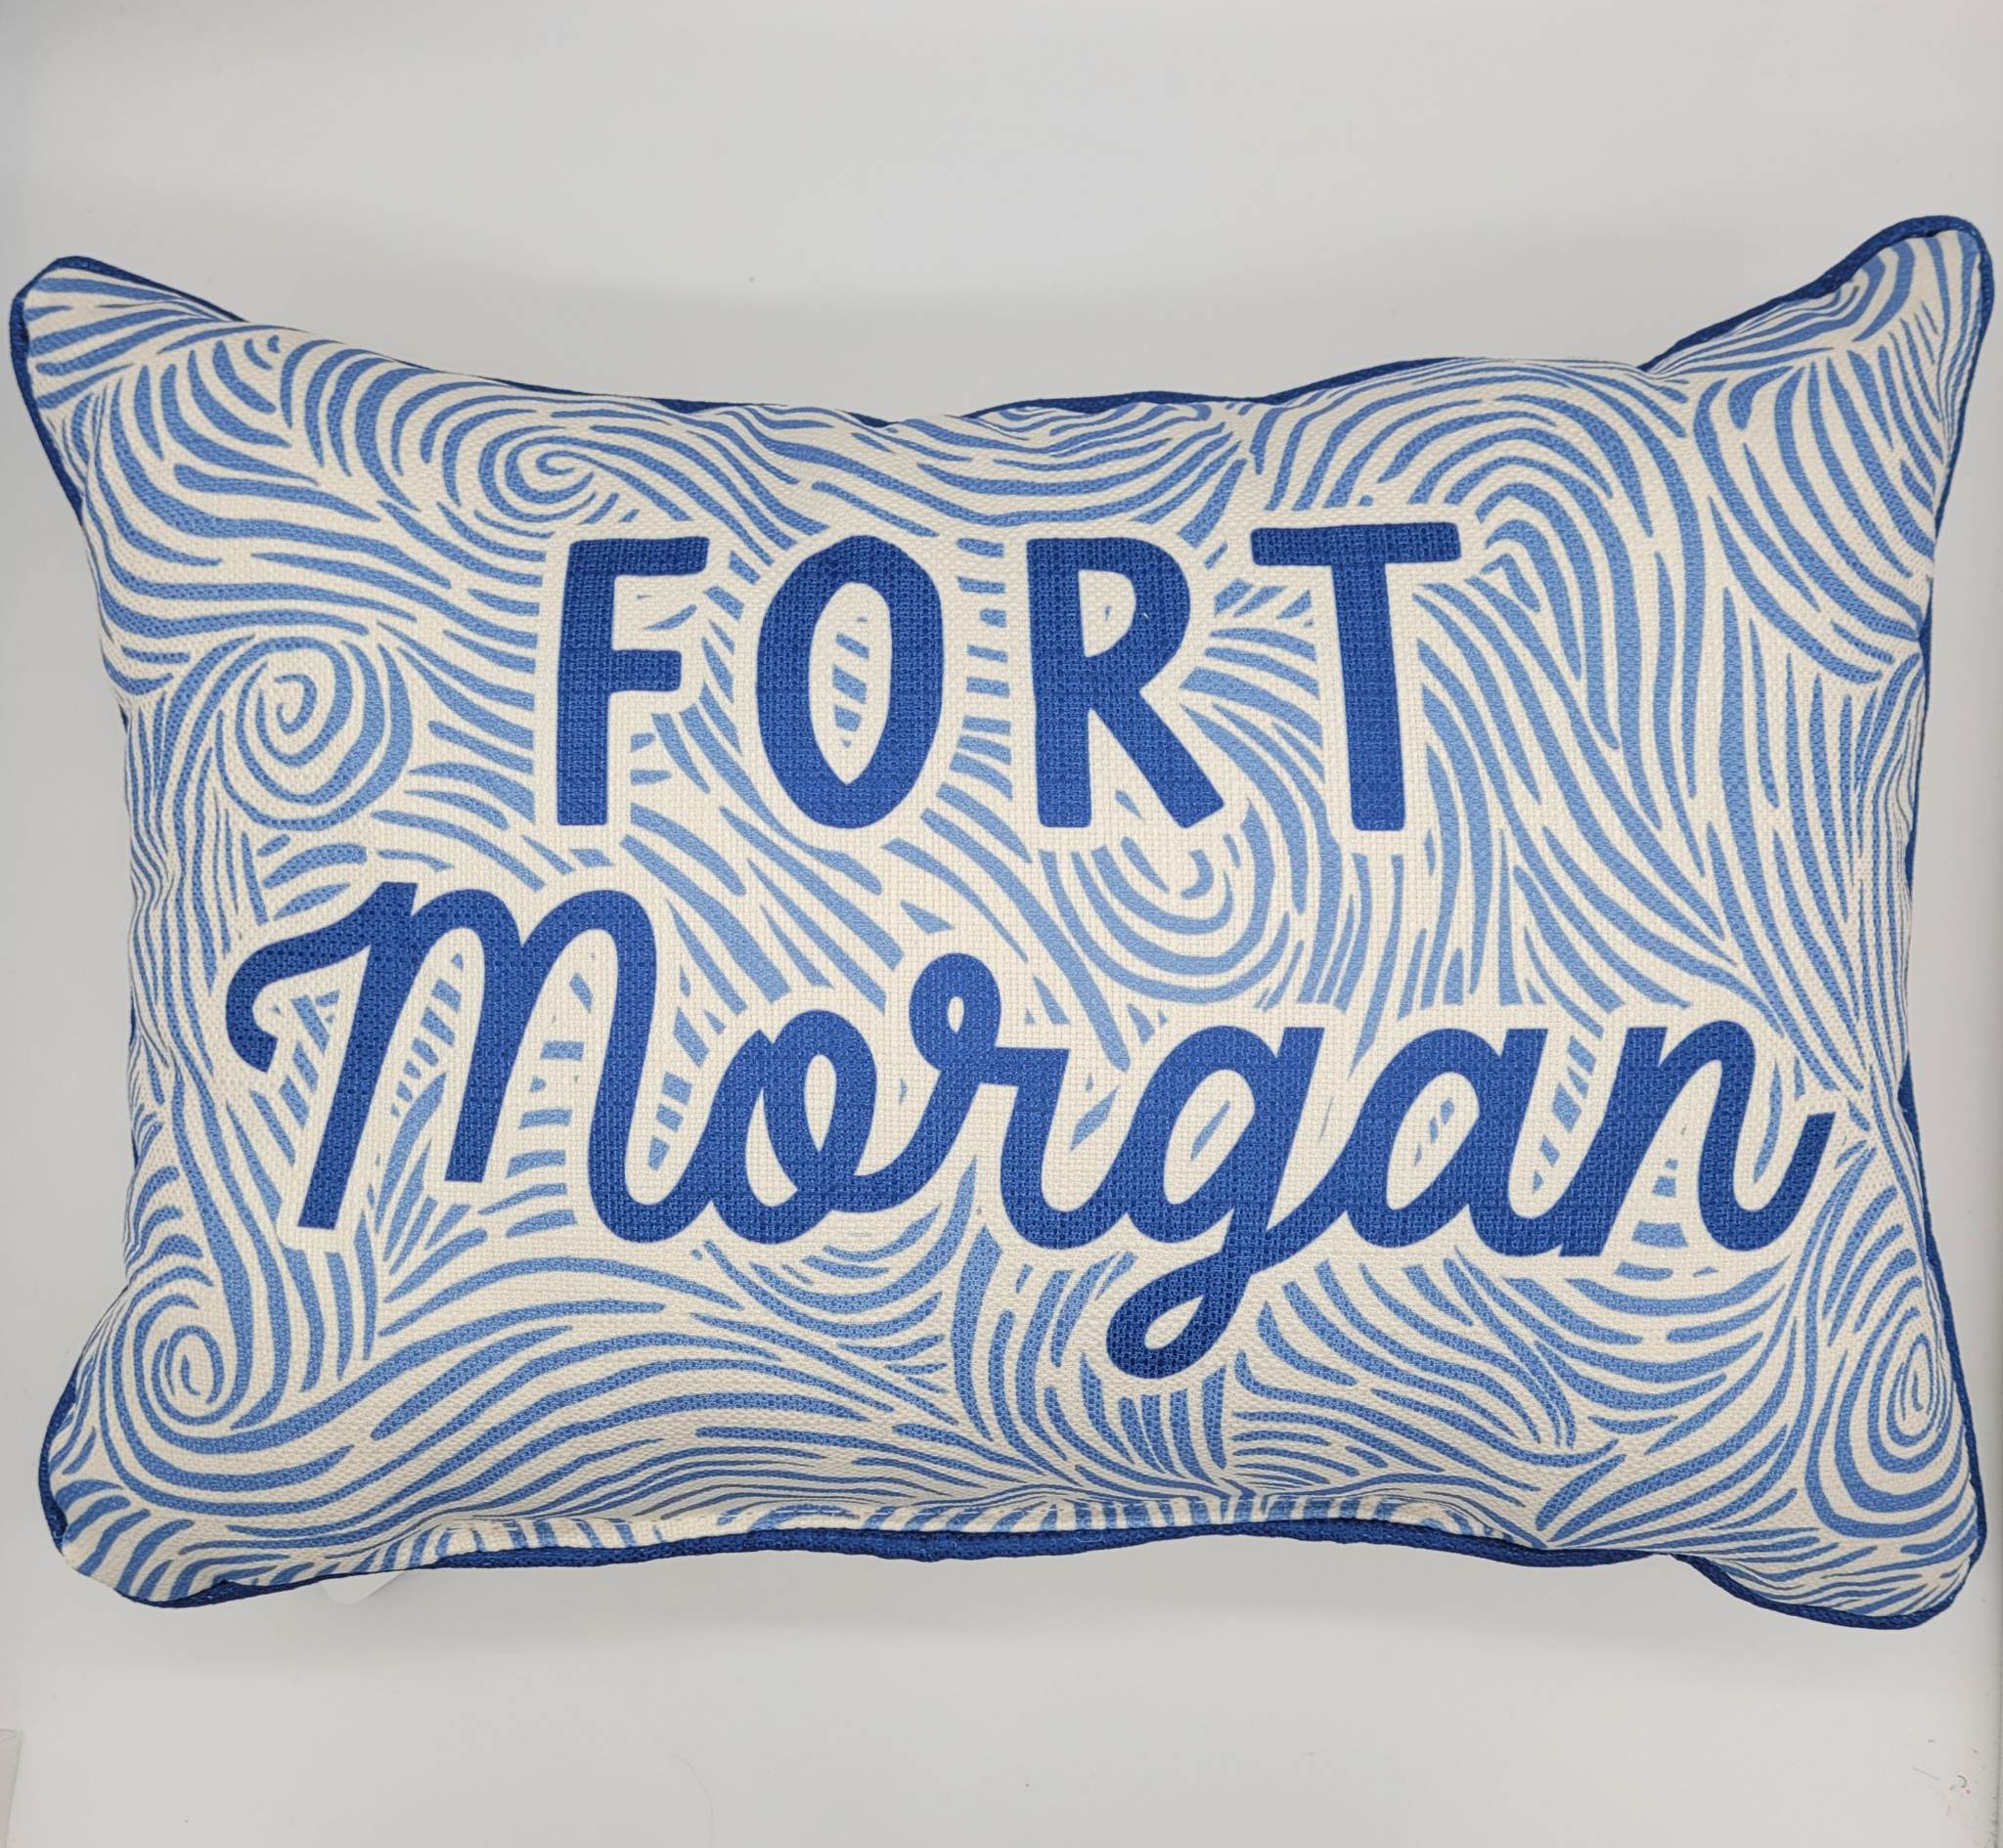 Fort Morgan Waves Pillow